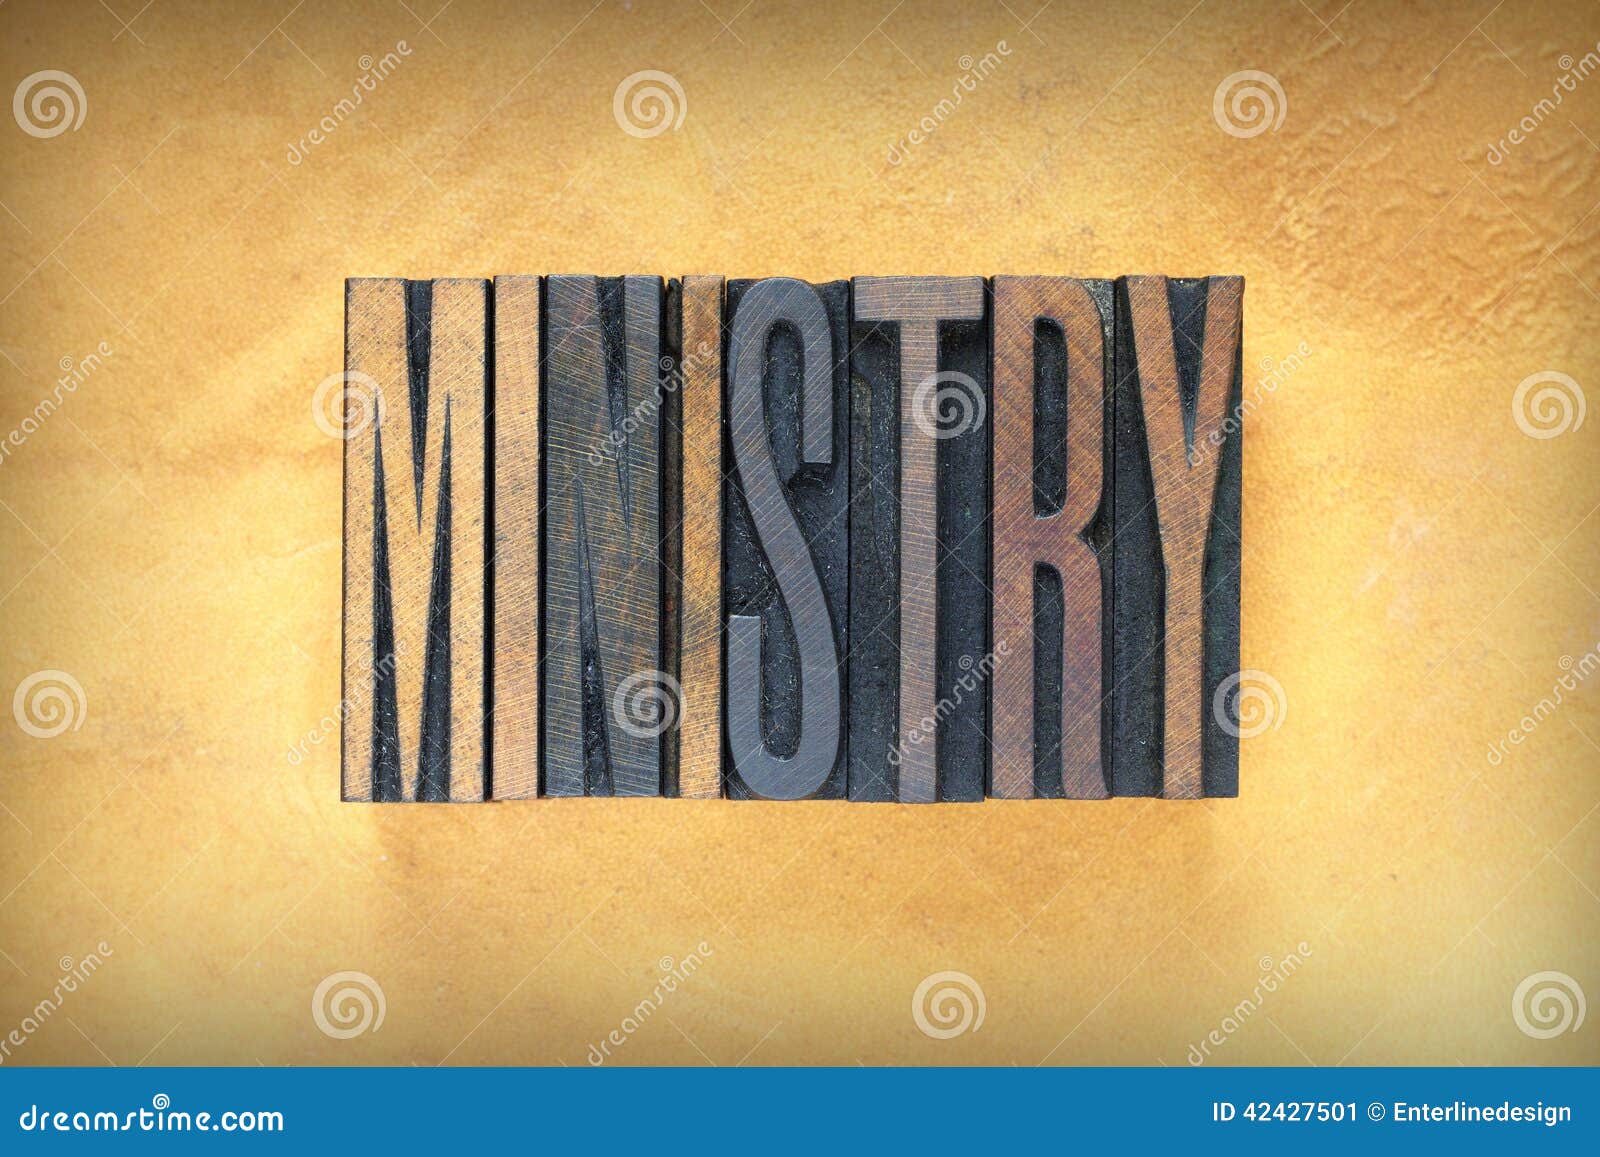 ministry letterpress